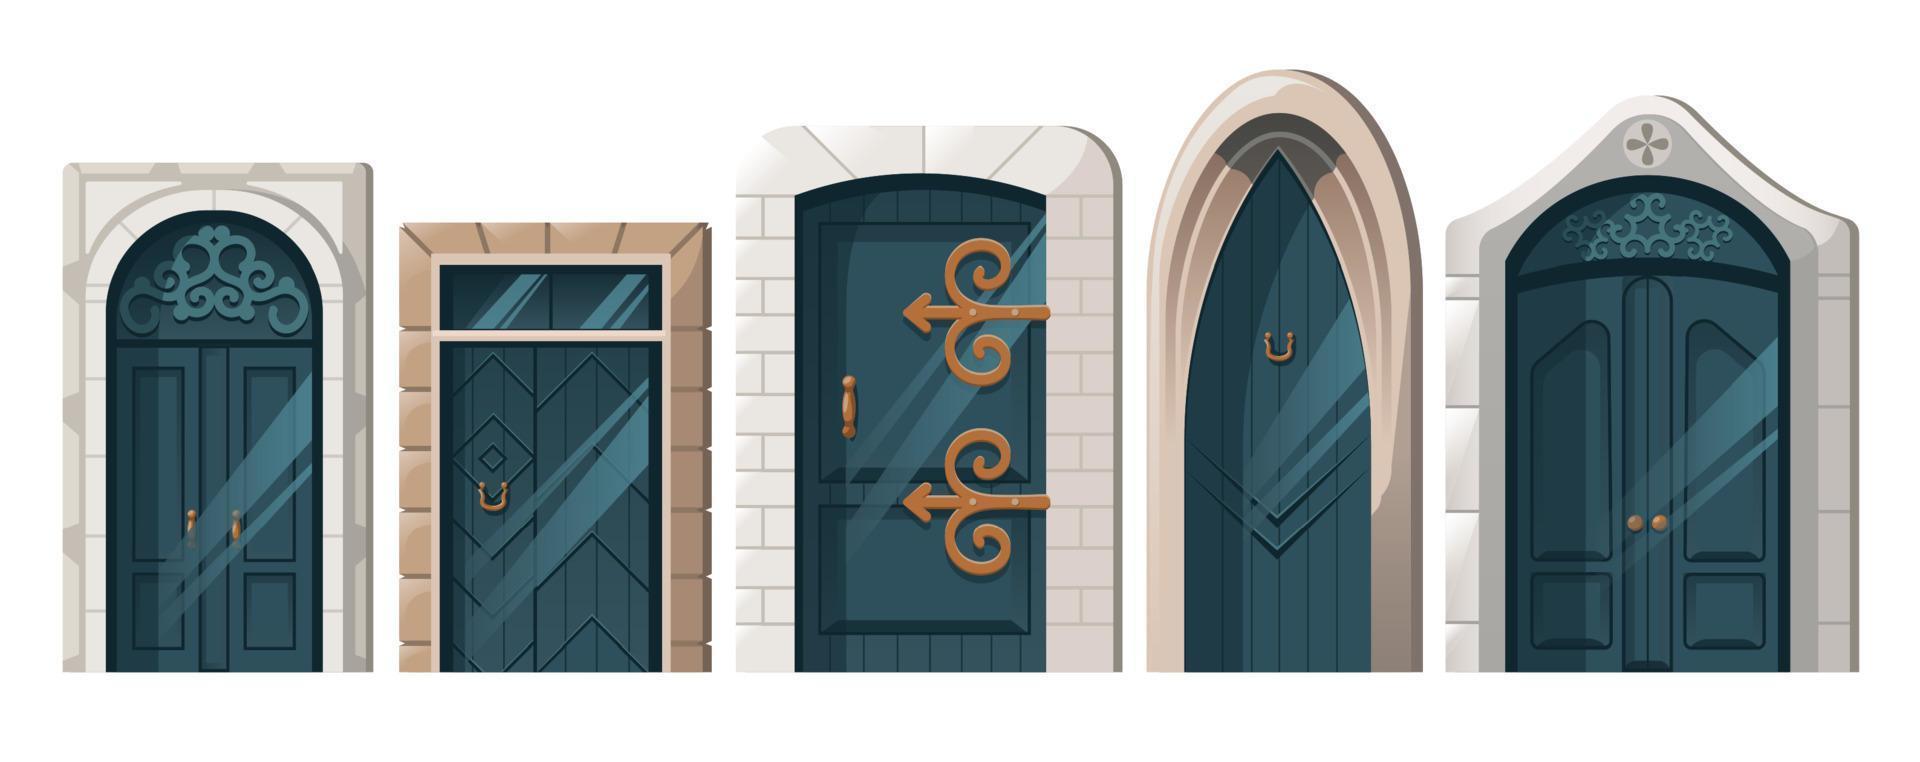 Ancient doors, cartoon medieval castle entries set vector